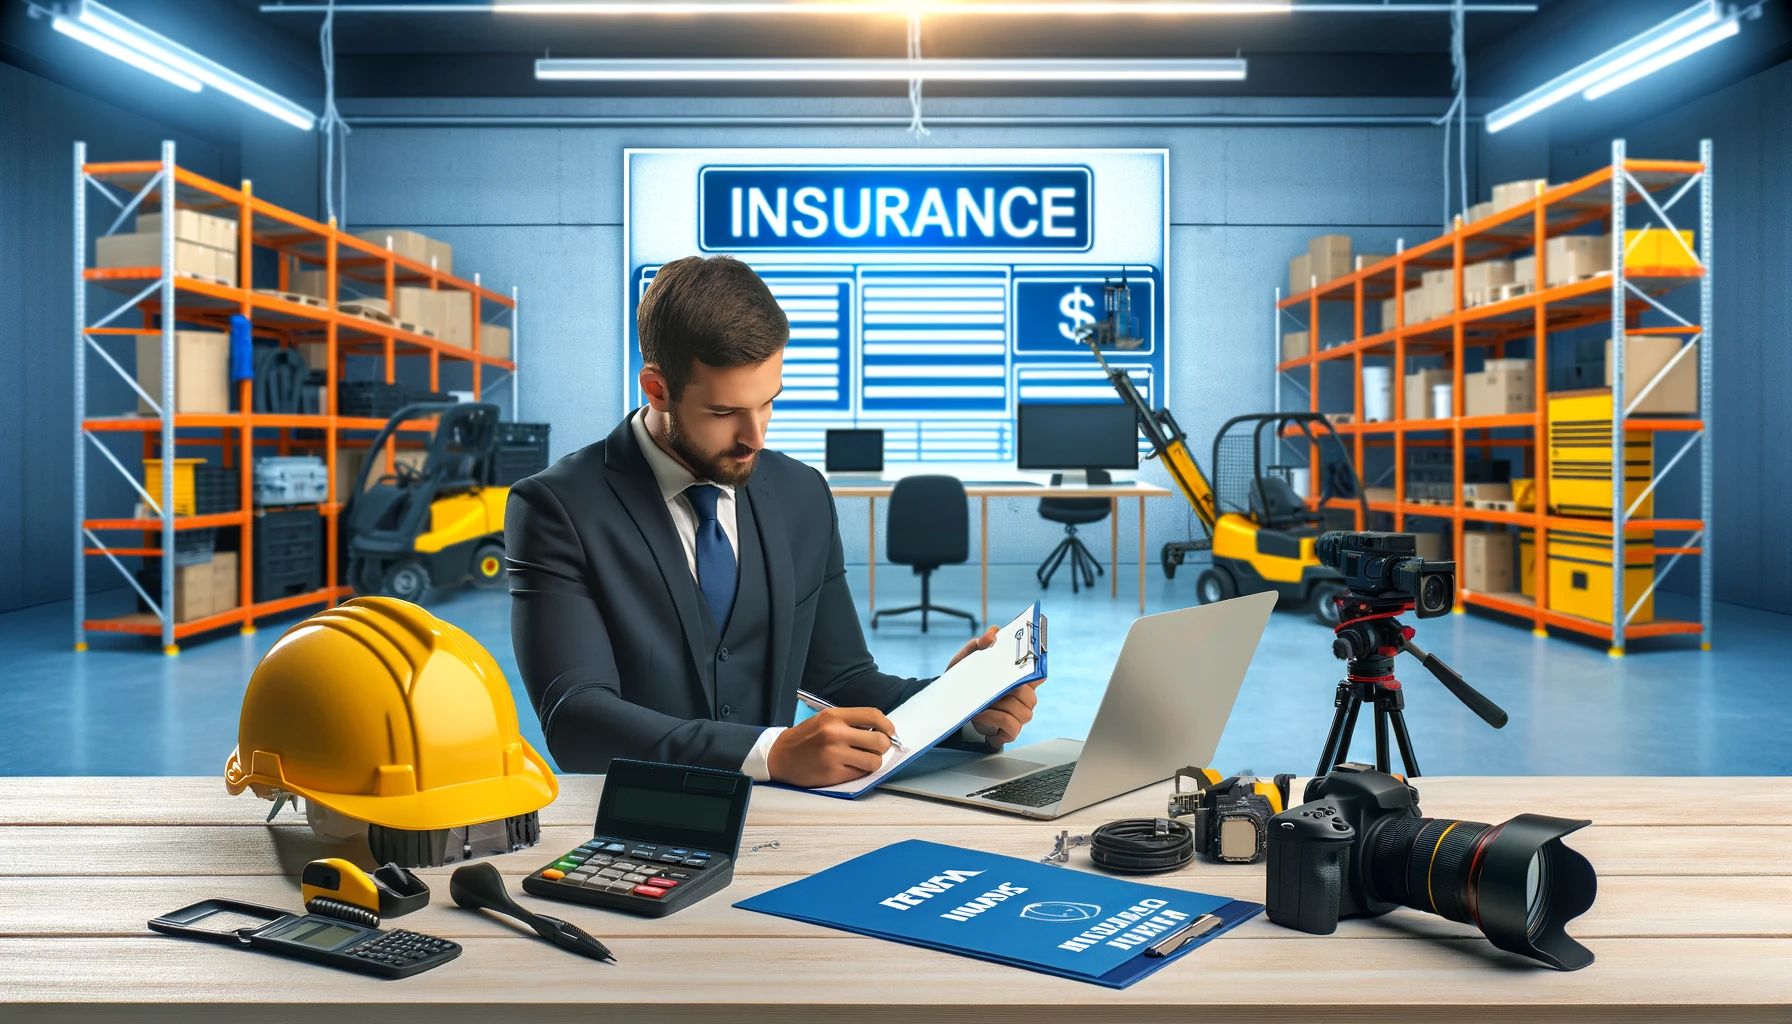 Rental insurance guide for businesses